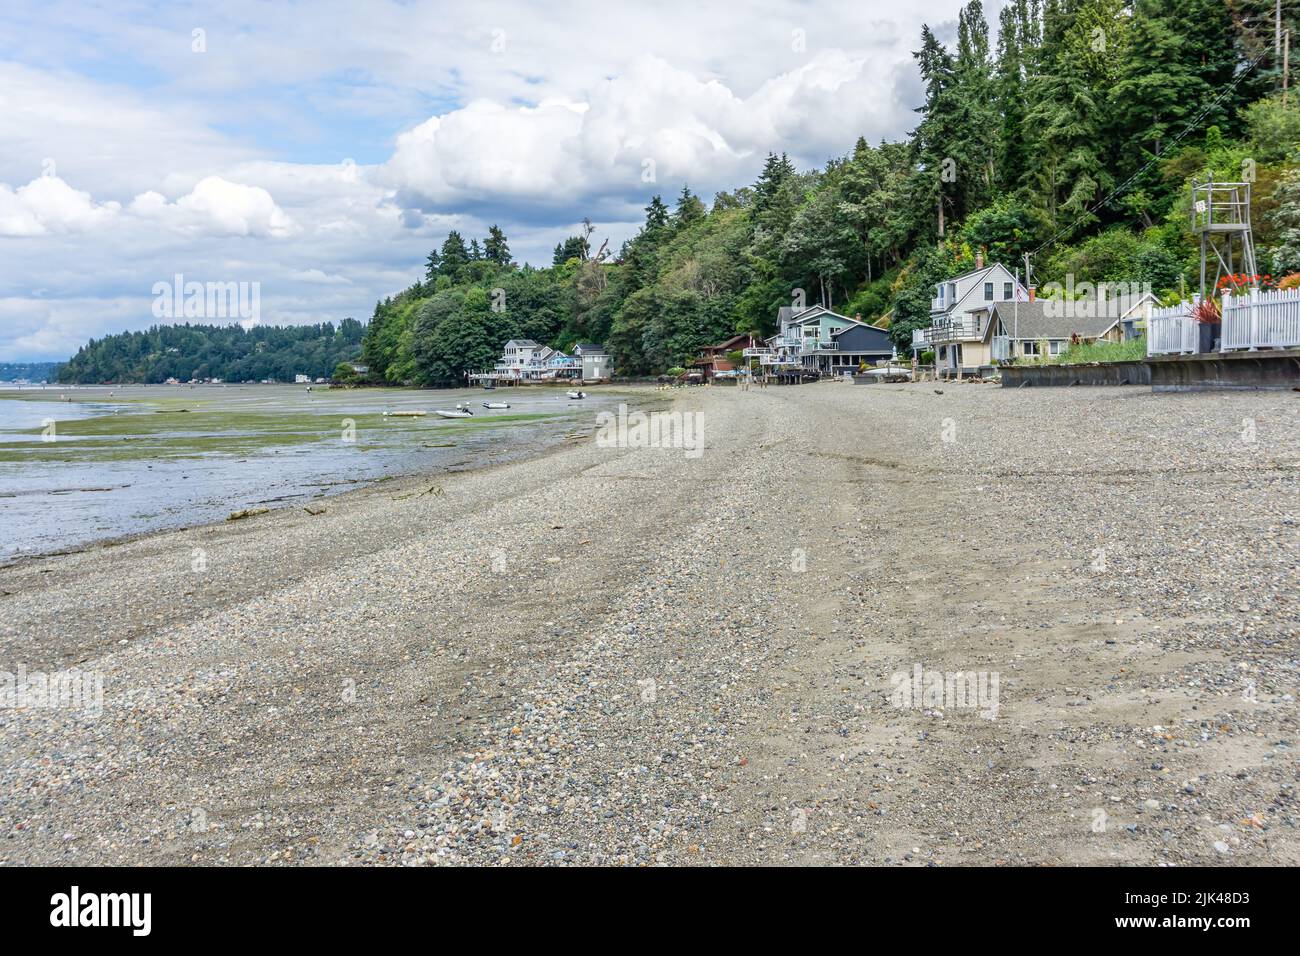 A view of the shoreline in Dash Point, Washington. Stock Photo